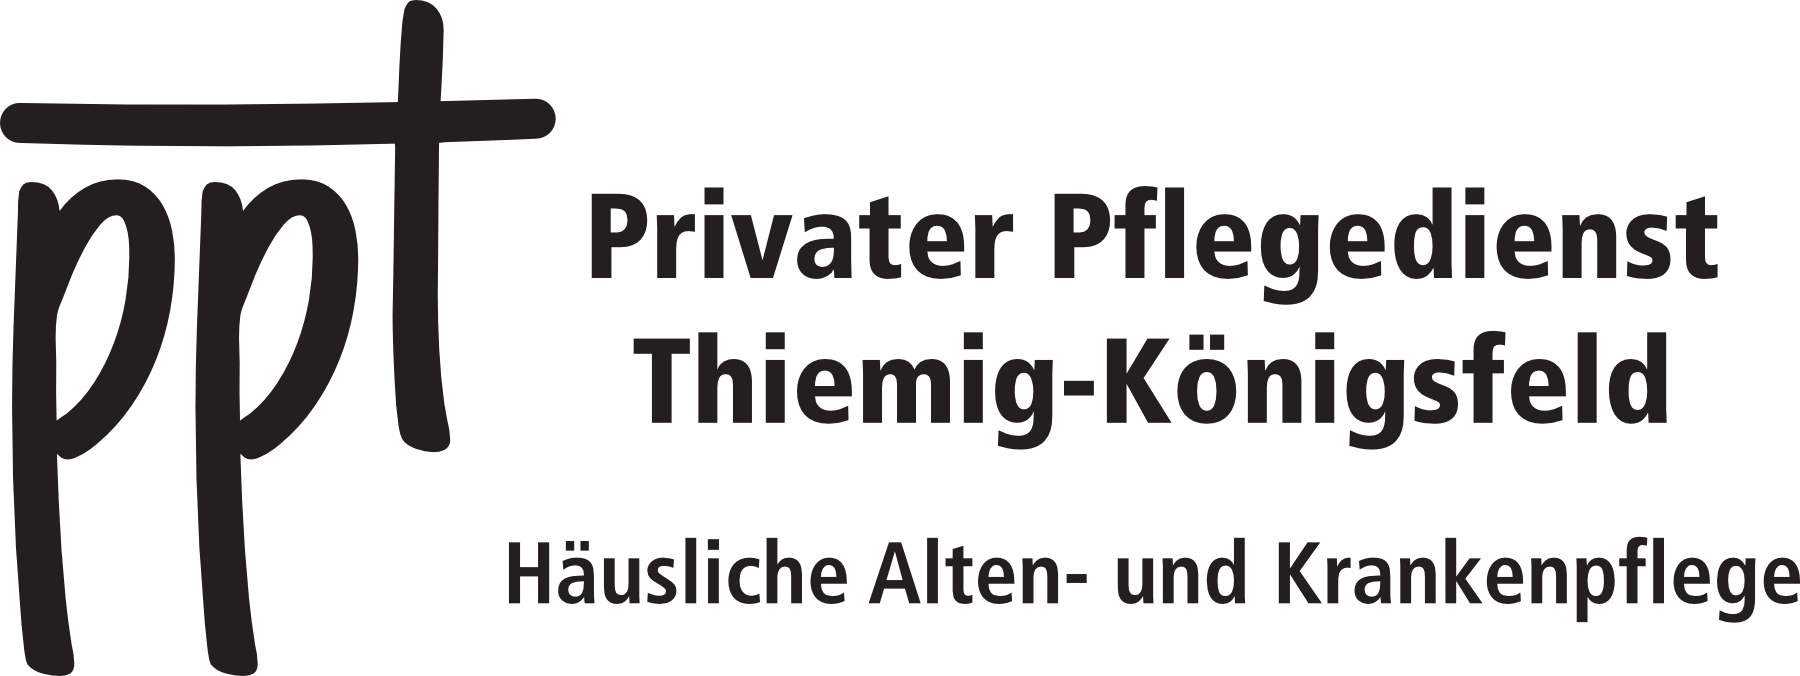 Logo: Privater Pflegedienst Thiemig-Königsfeld